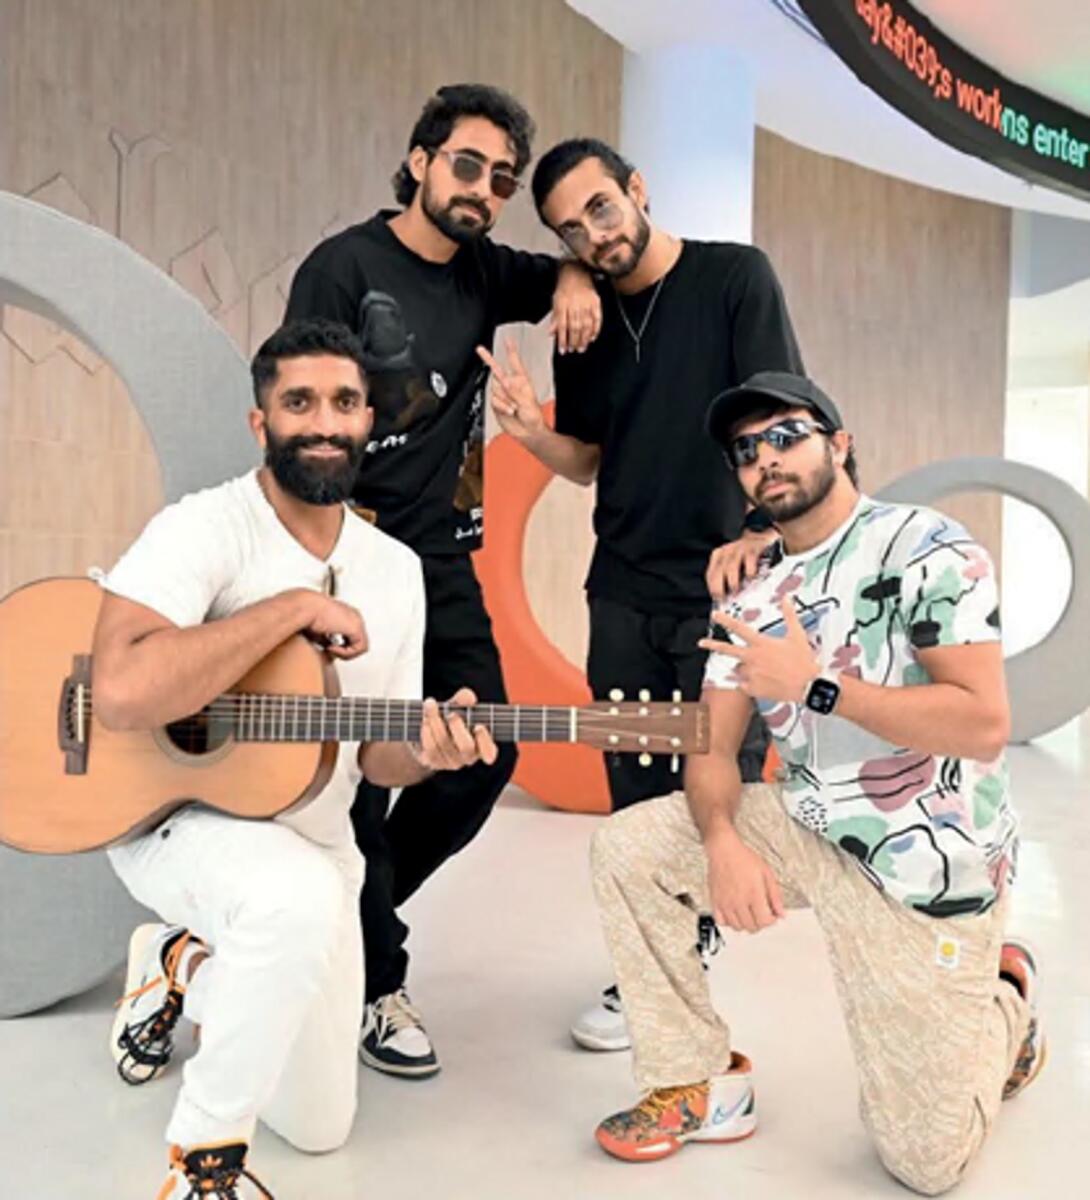 Popular Indian band Sanam serenaded us in December